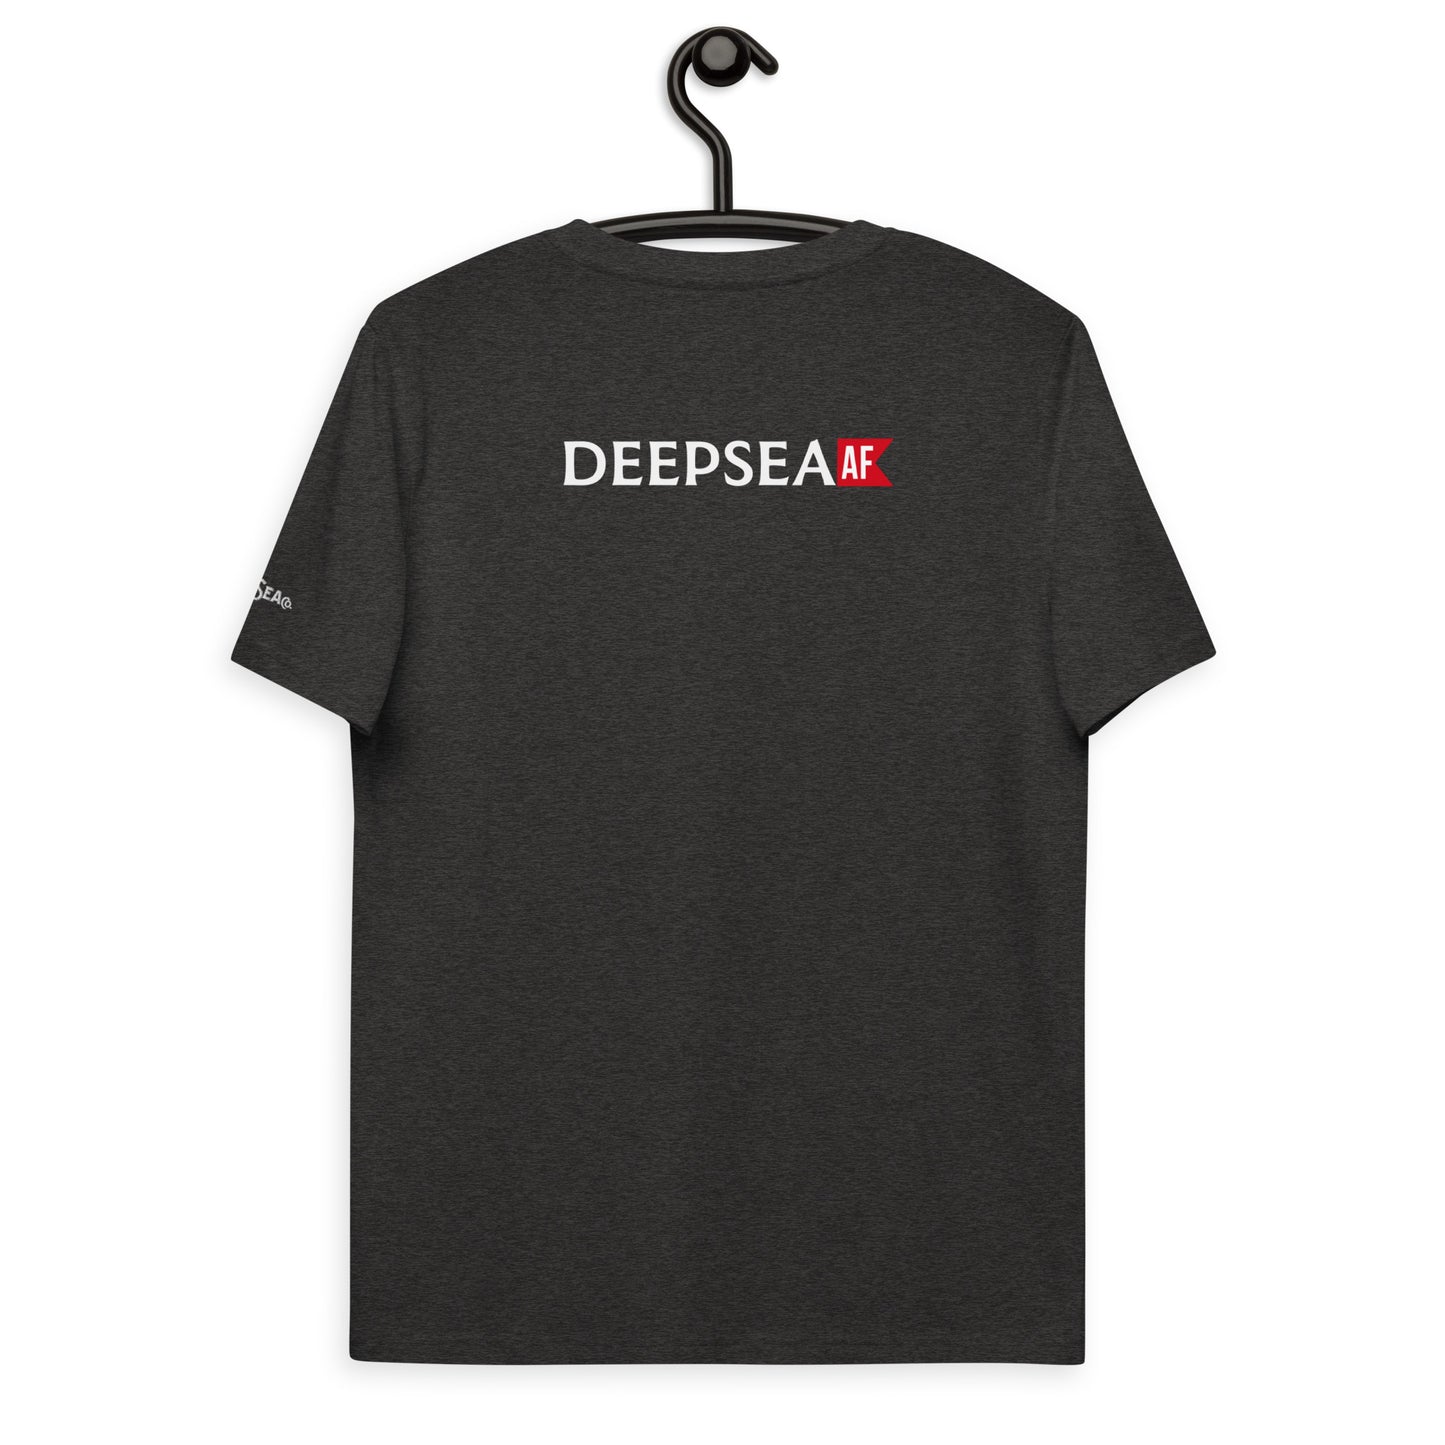 DEEPSEA AF™ Unisex organic cotton t-shirt